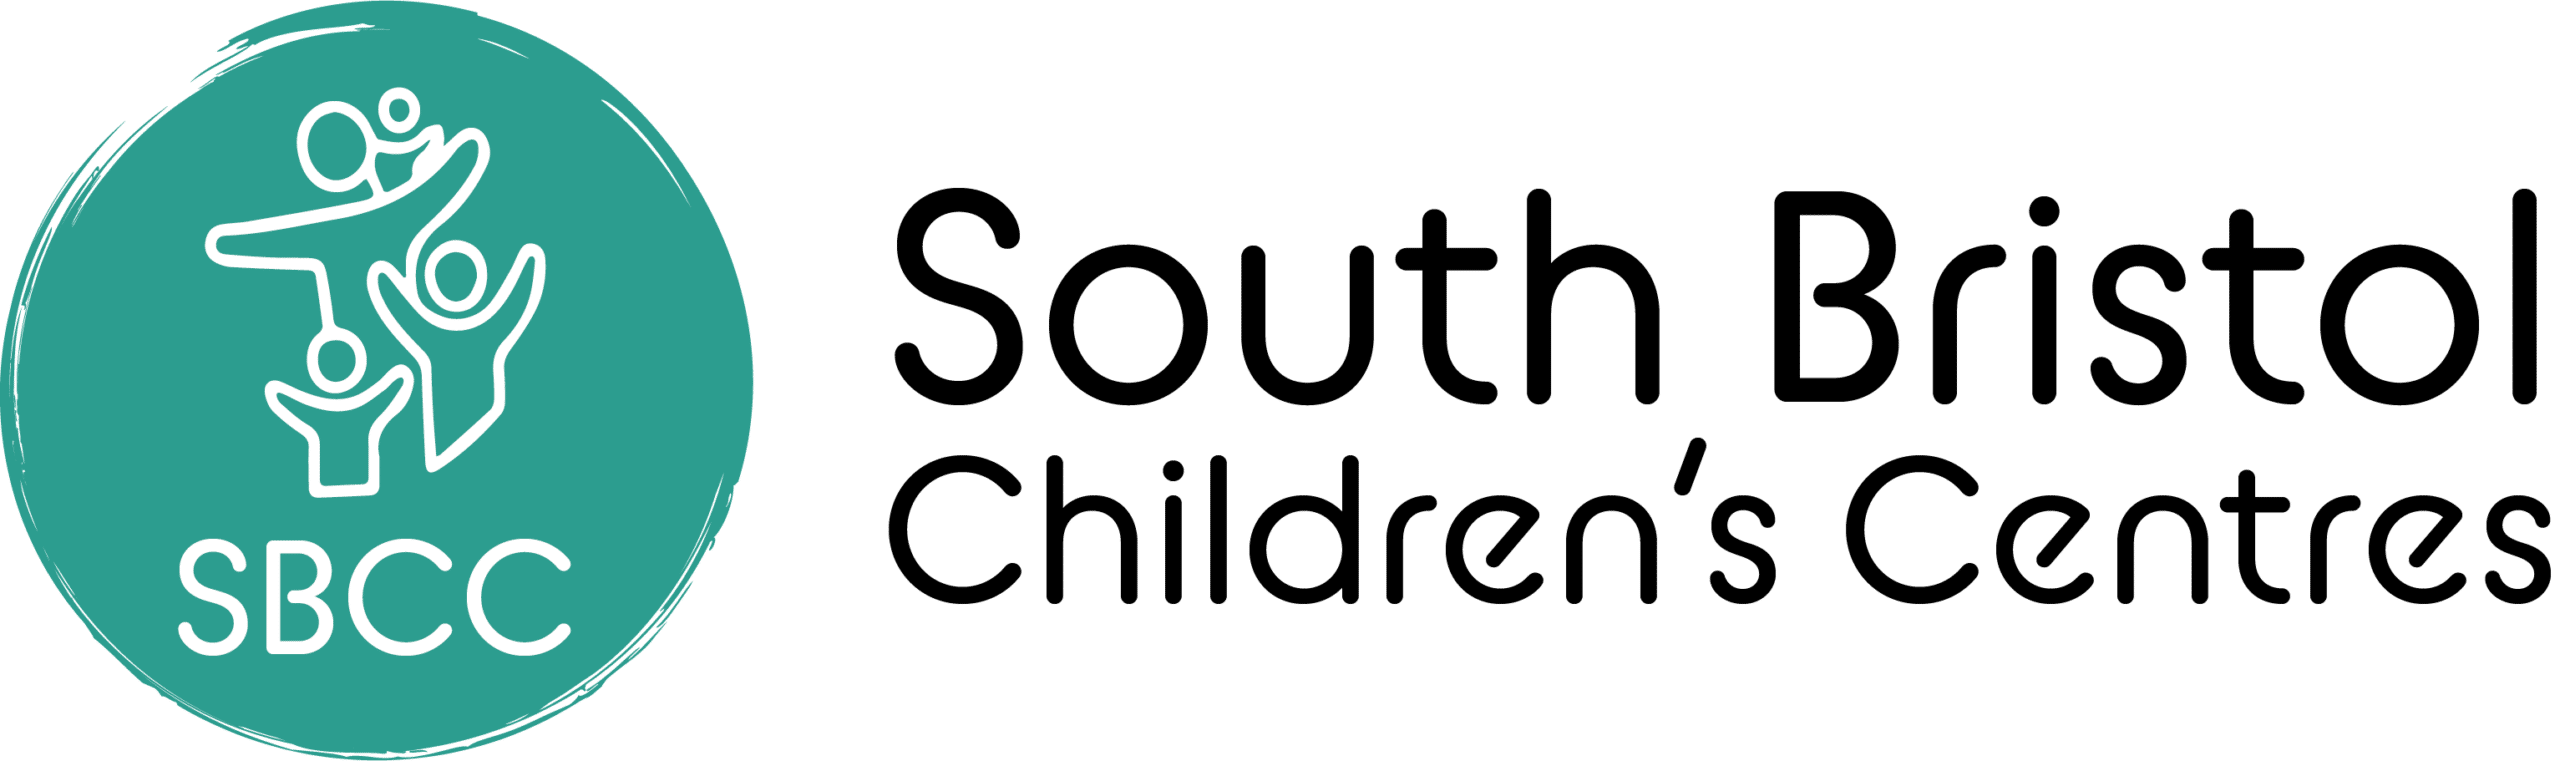 South Bristol Children's Centres